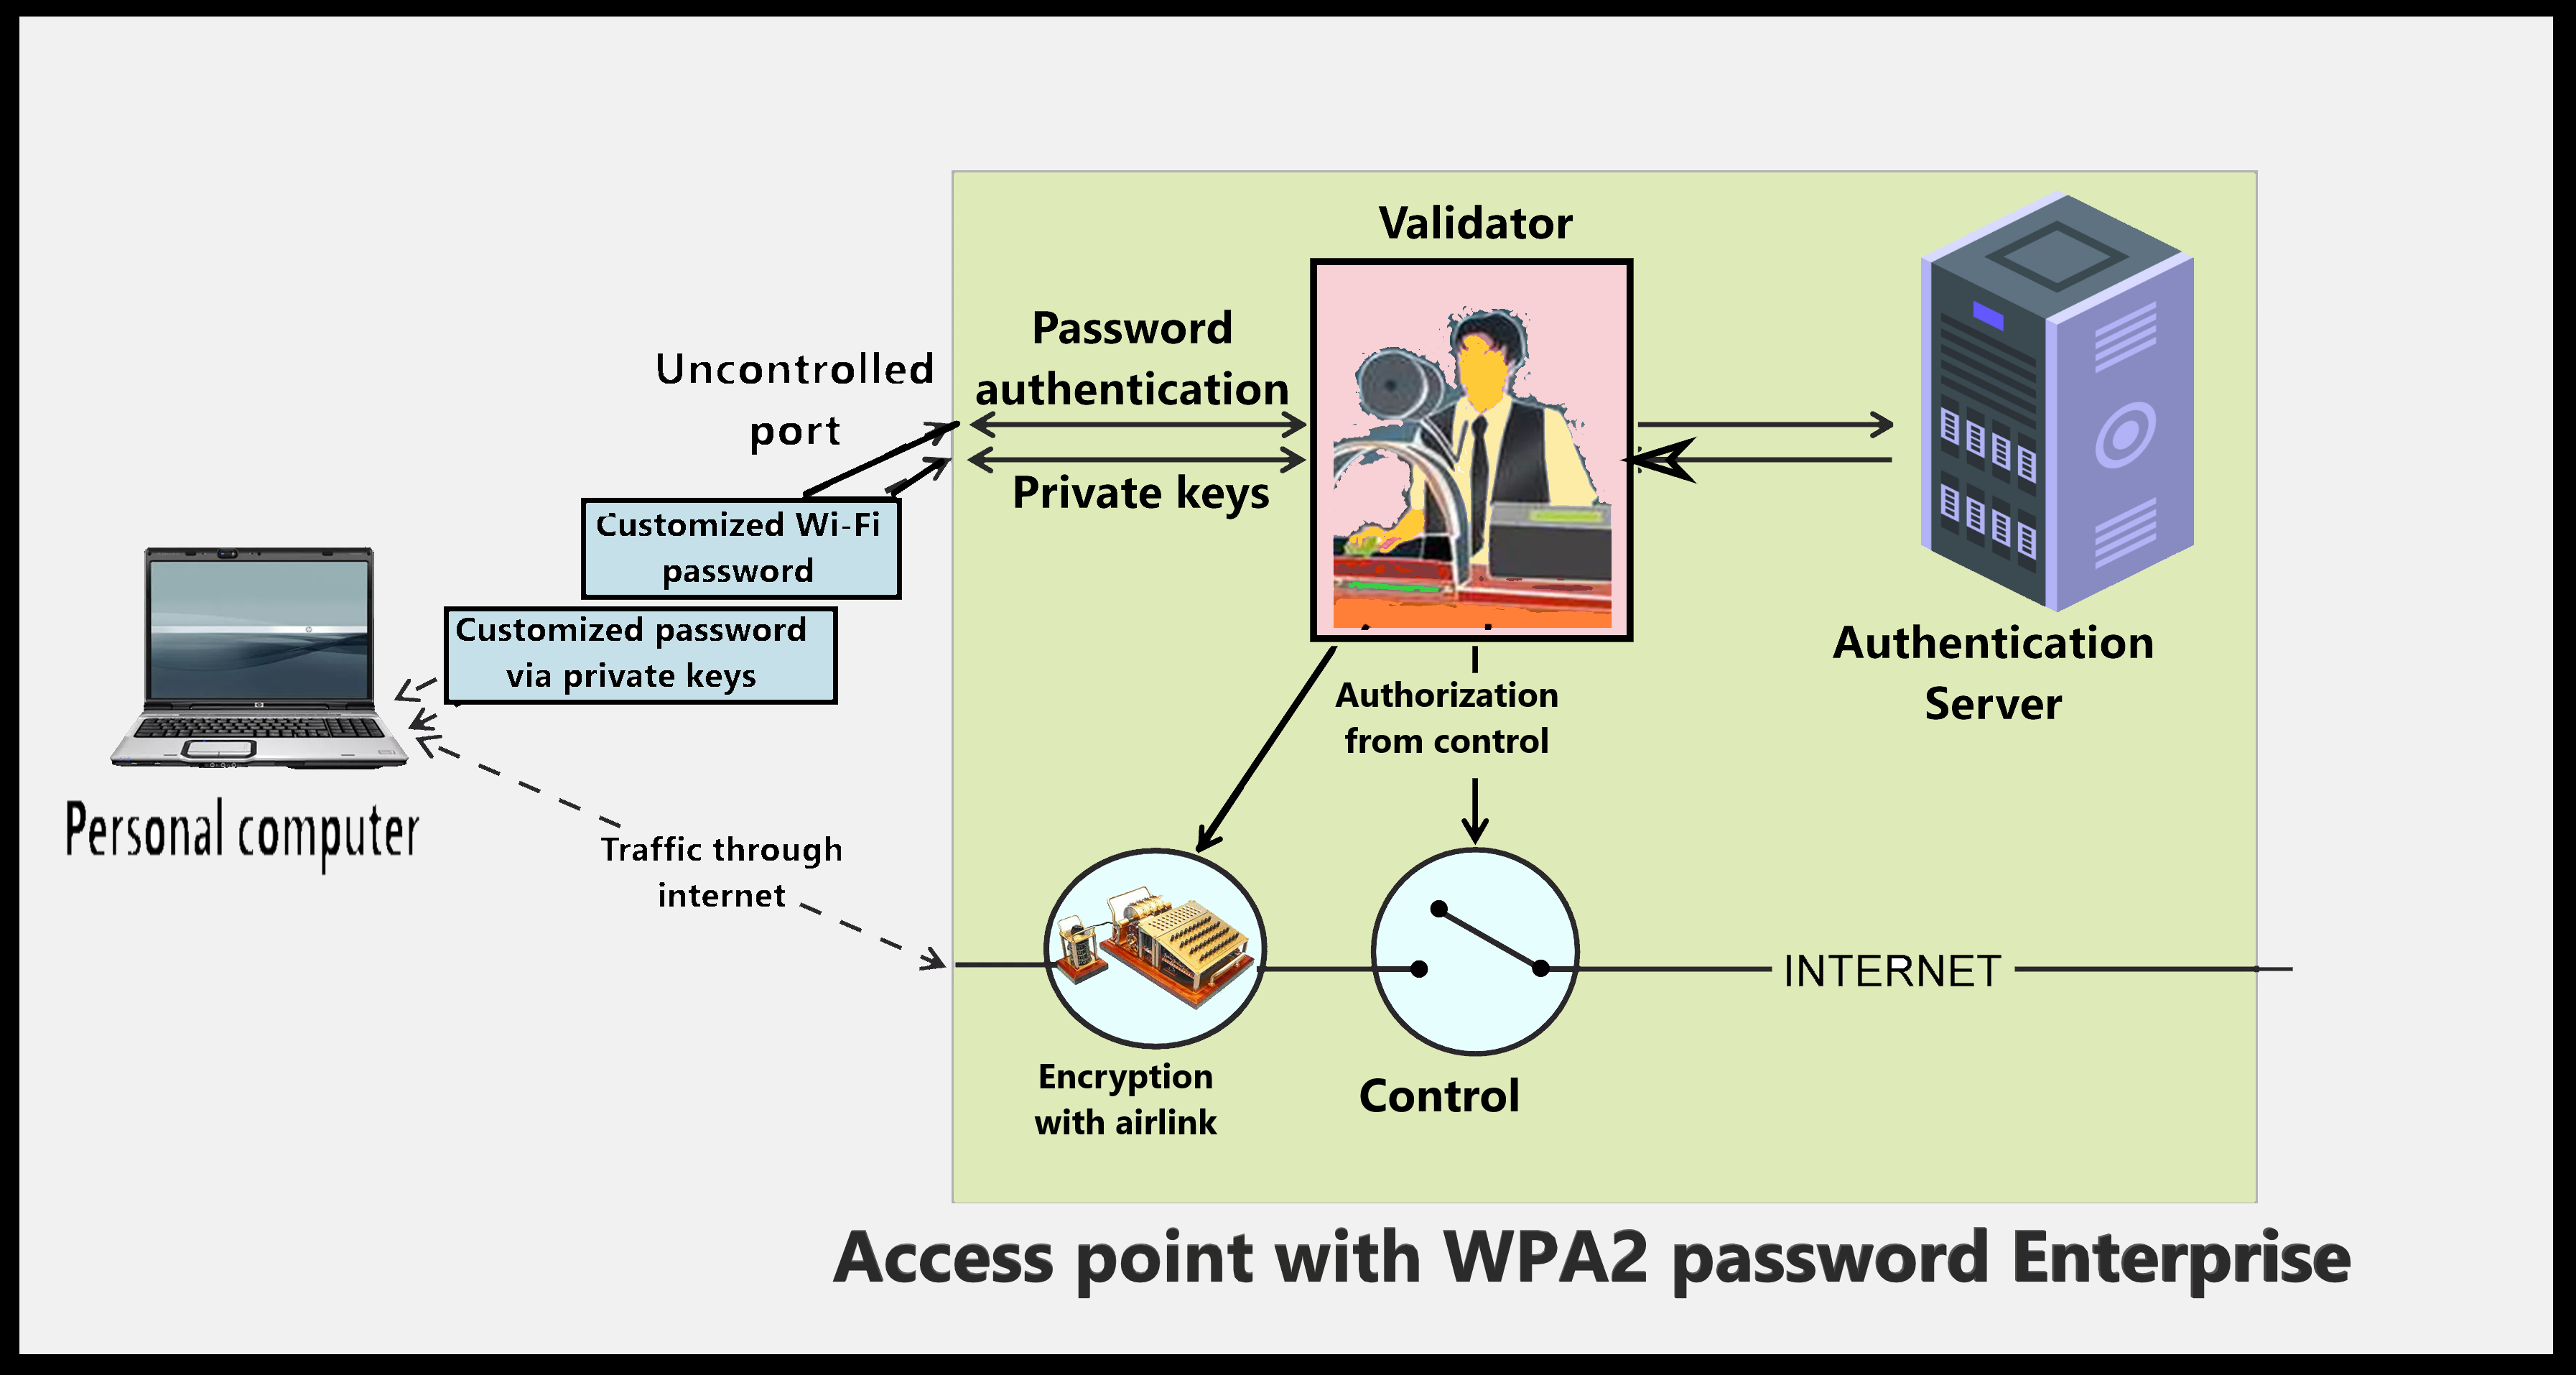 WPA2-safest type of Wi-Fi password